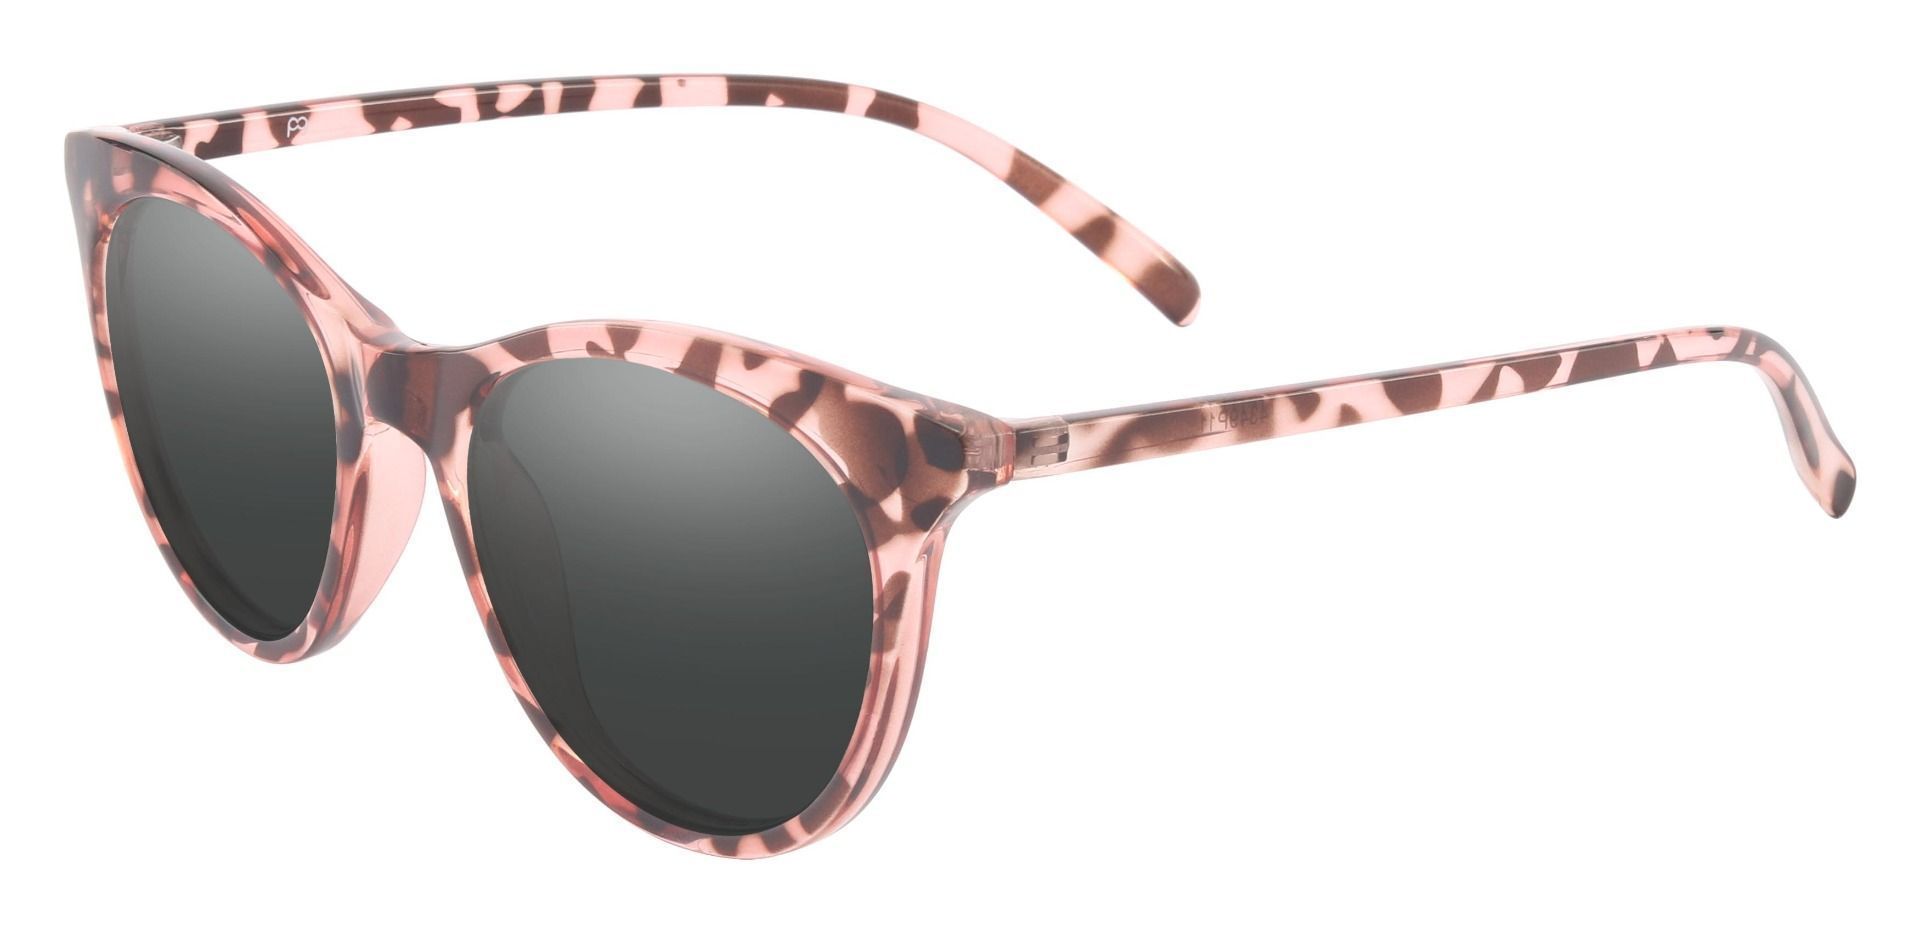 Valencia Cat Eye Prescription Sunglasses - Pink Frame With Gray Lenses